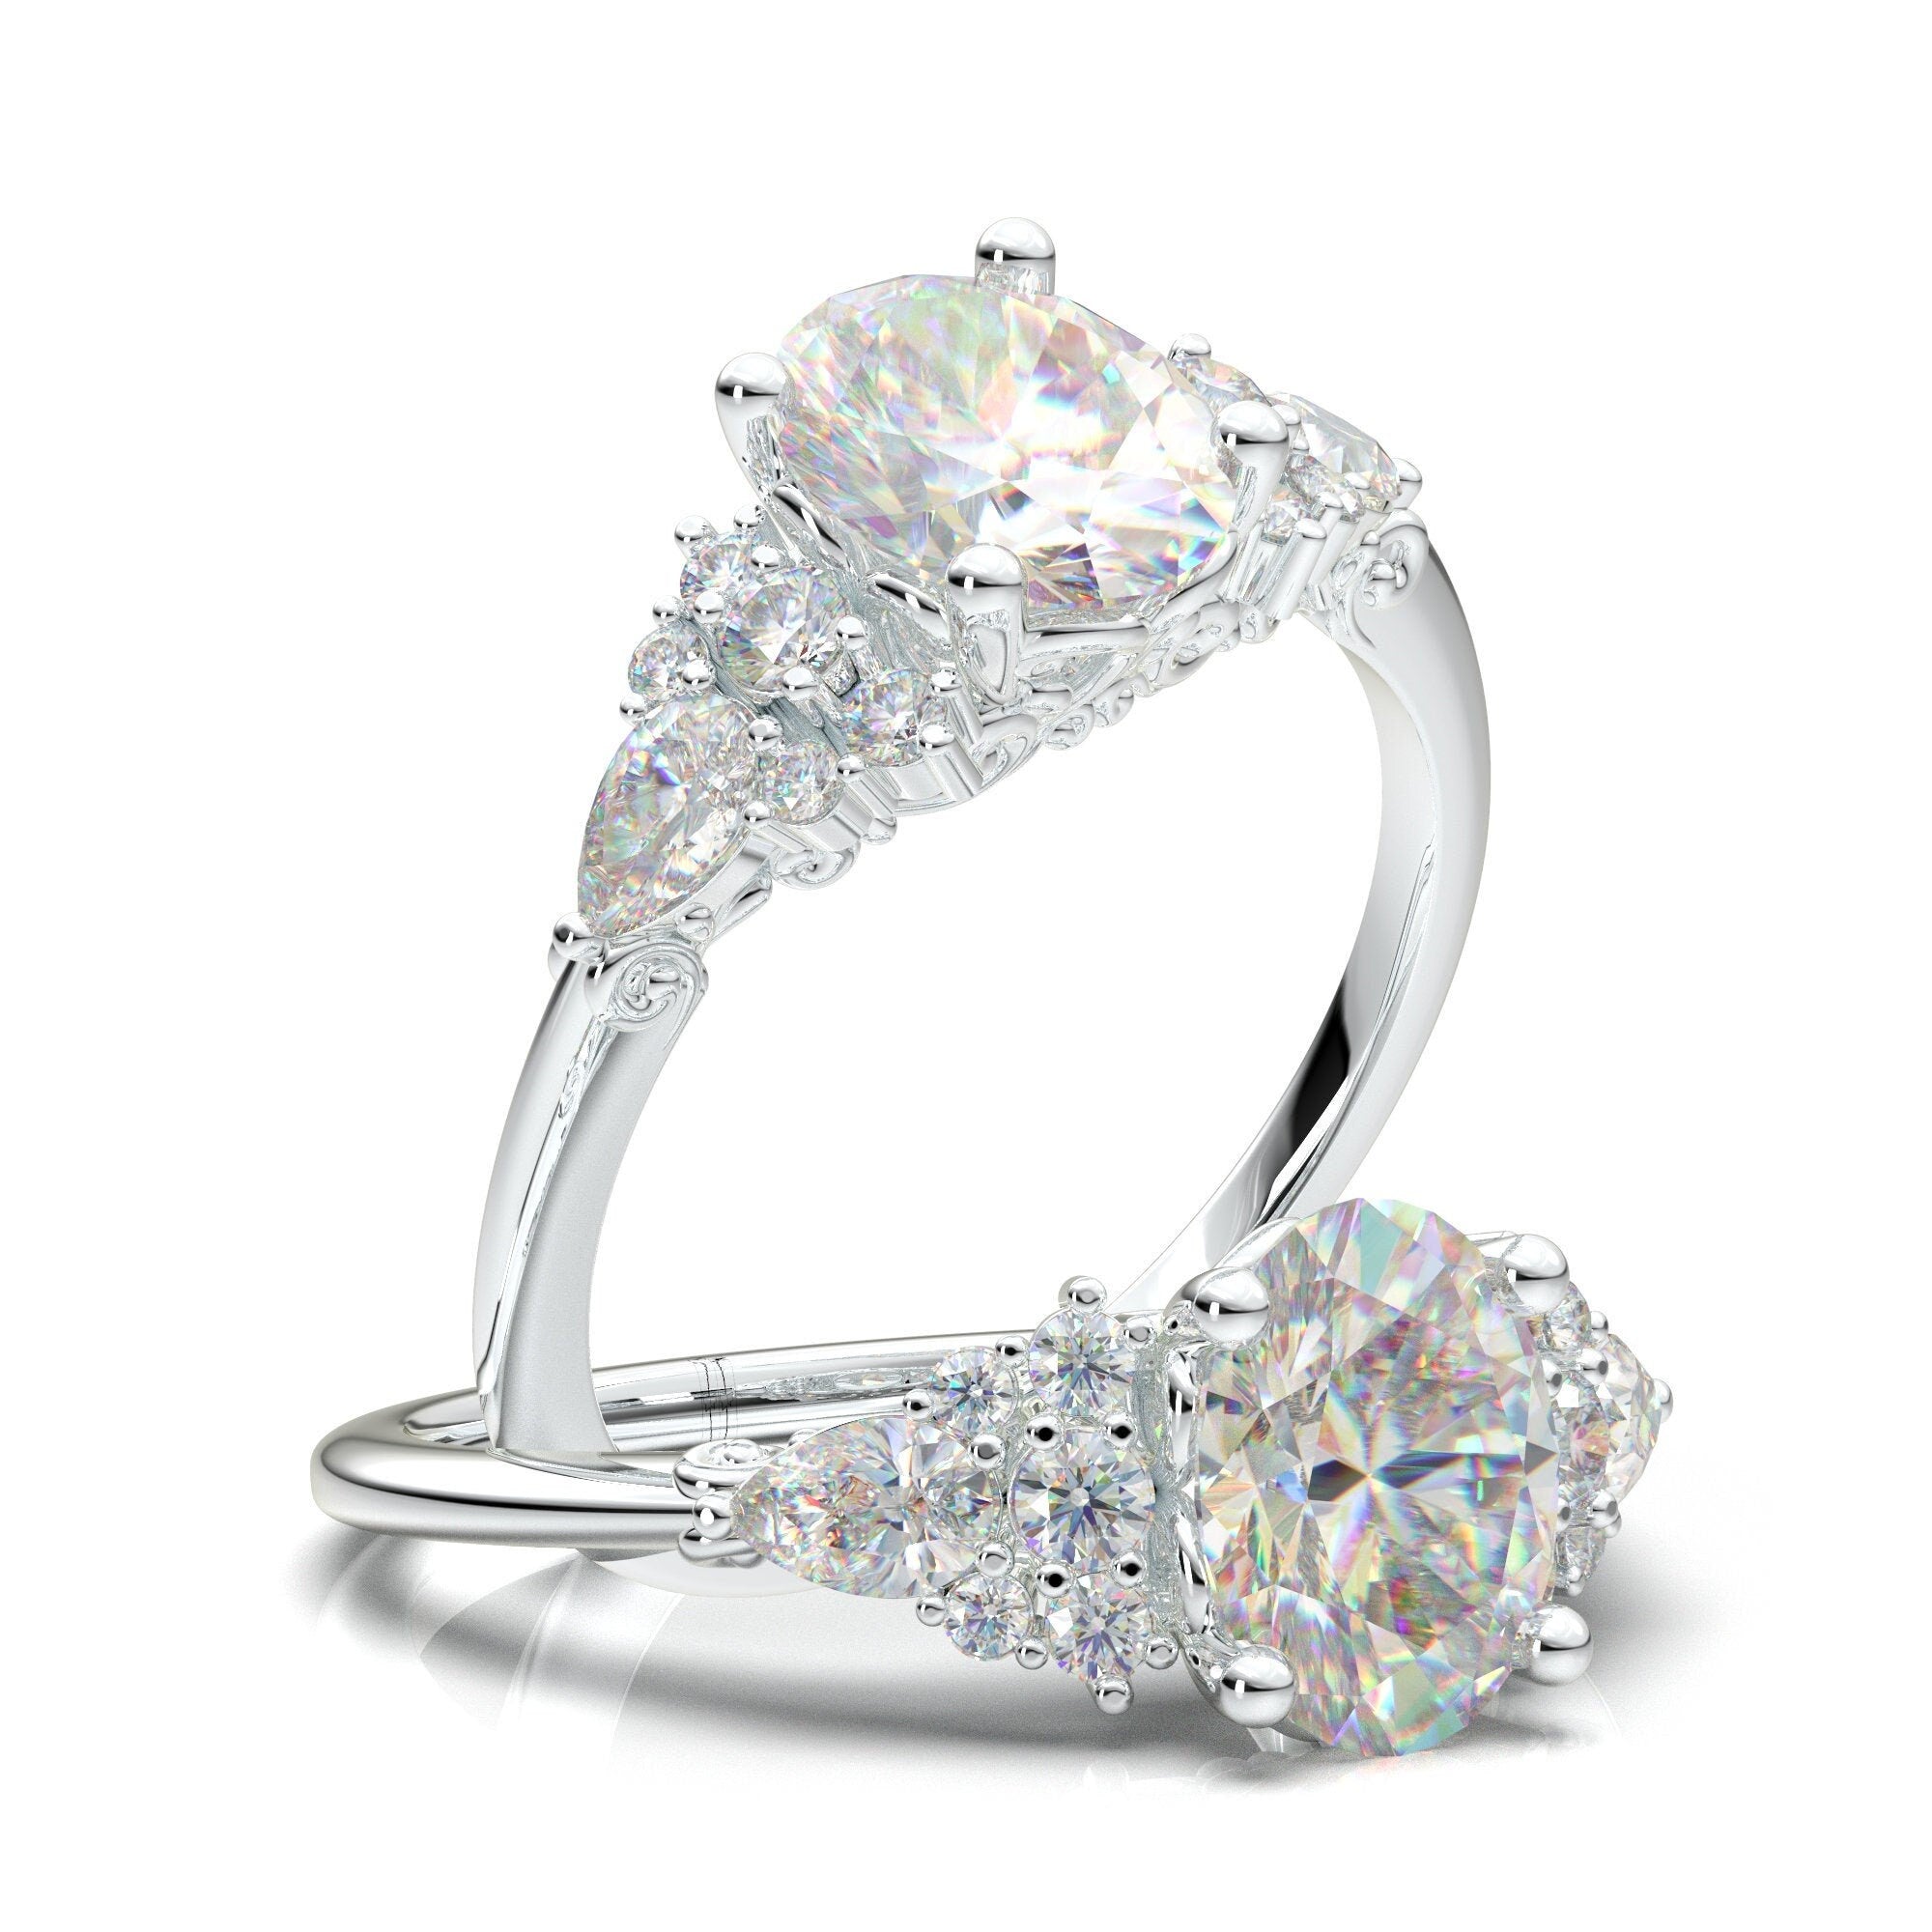 Vintage Oval Diamond Ring, White Gold Filigree Ring, Wedding Ring For